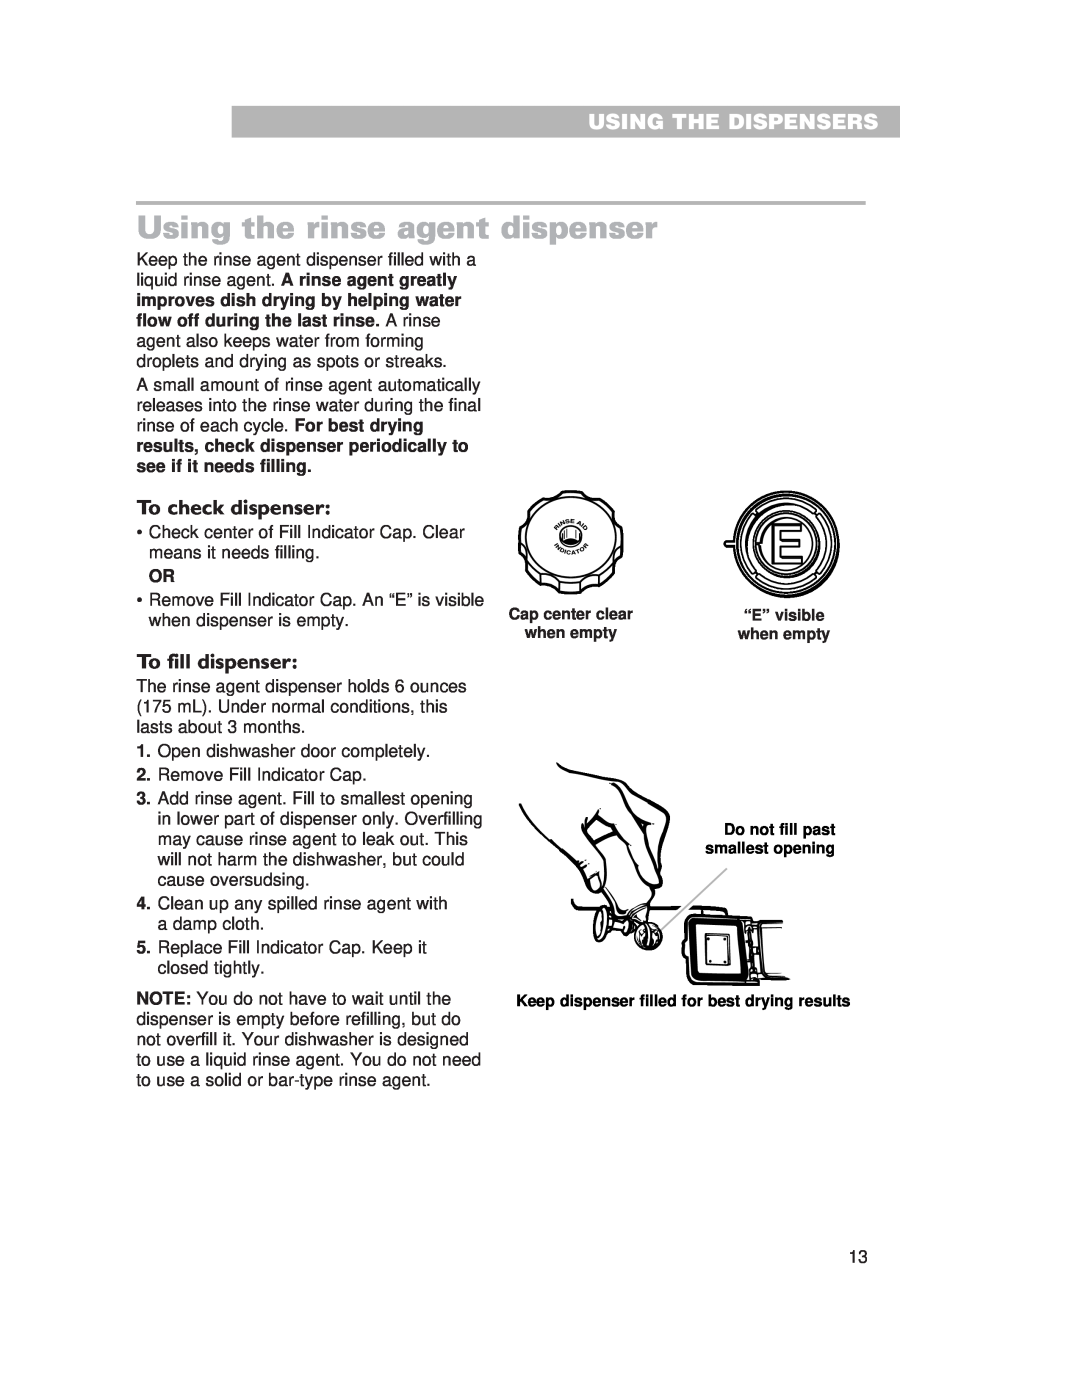 Whirlpool 980 warranty Using the rinse agent dispenser, Using The Dispensers, To check dispenser, To fill dispenser 